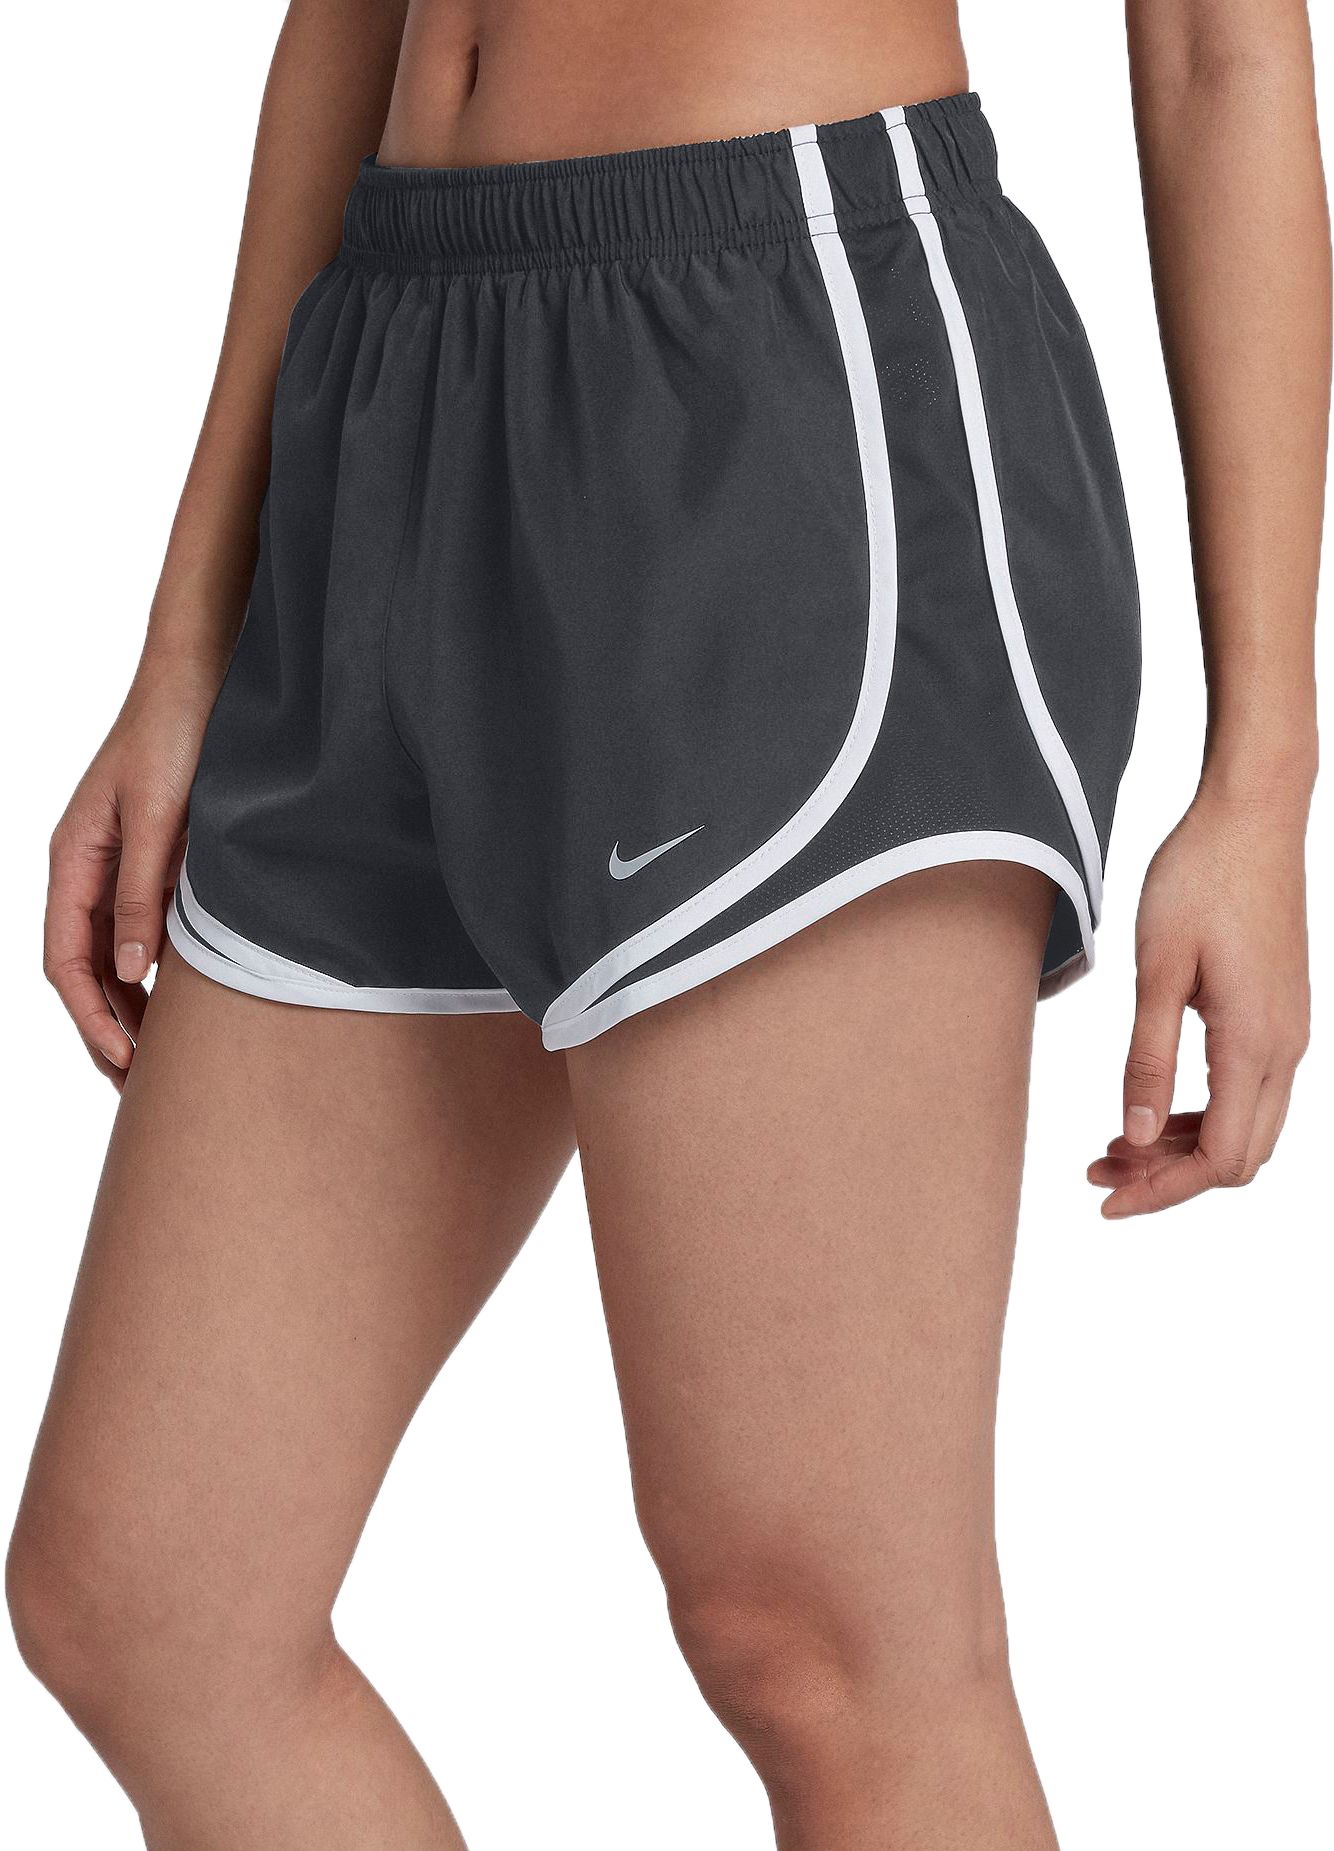 nike soft shorts womens